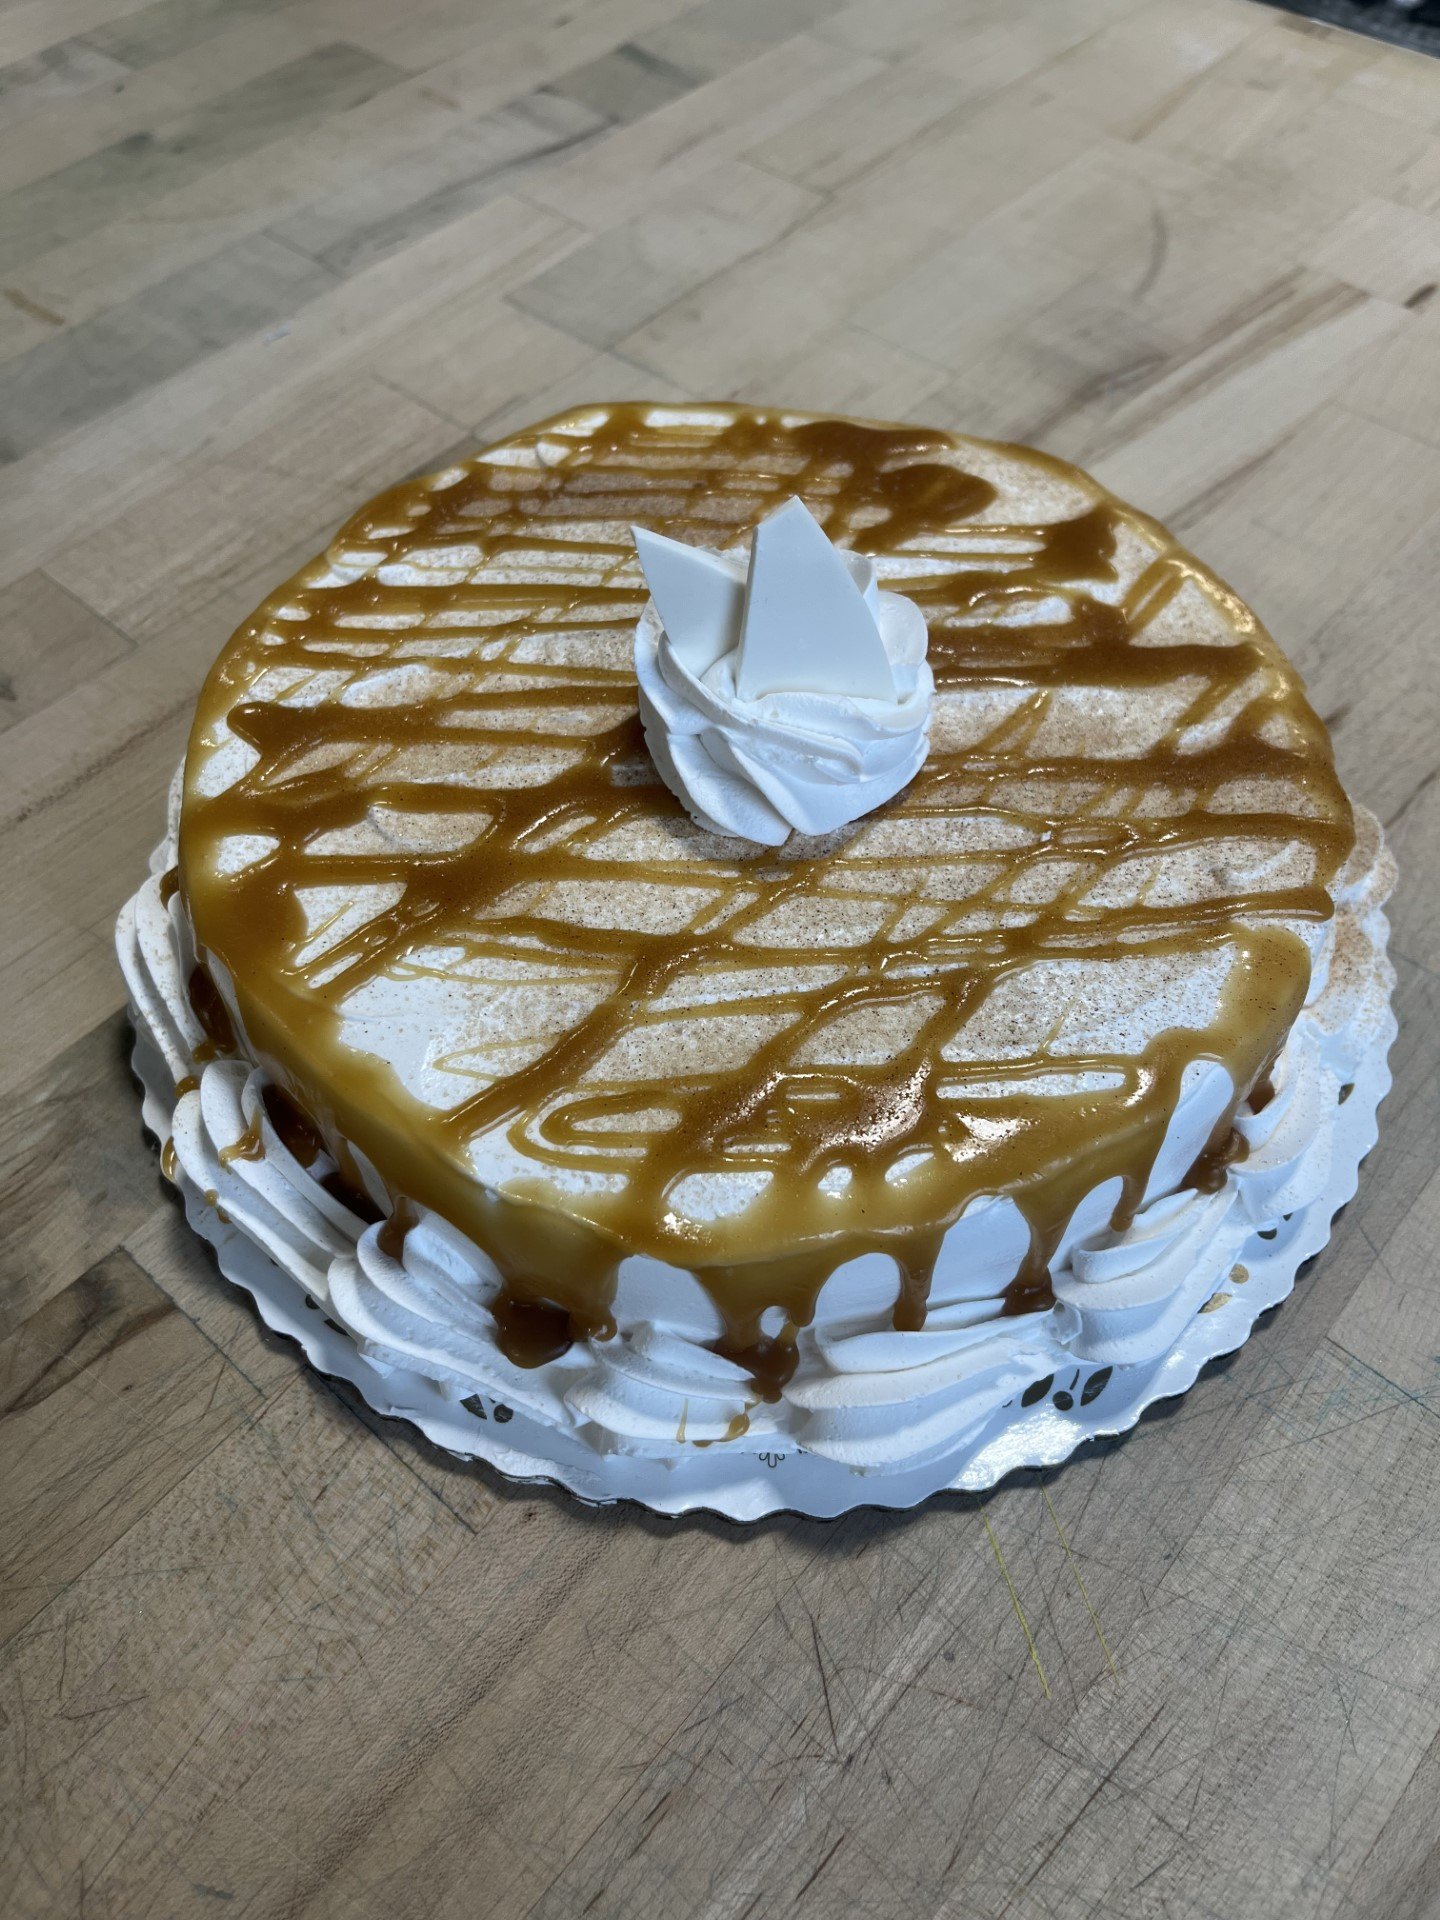 Share 52+ golden vancho cake super hot - awesomeenglish.edu.vn